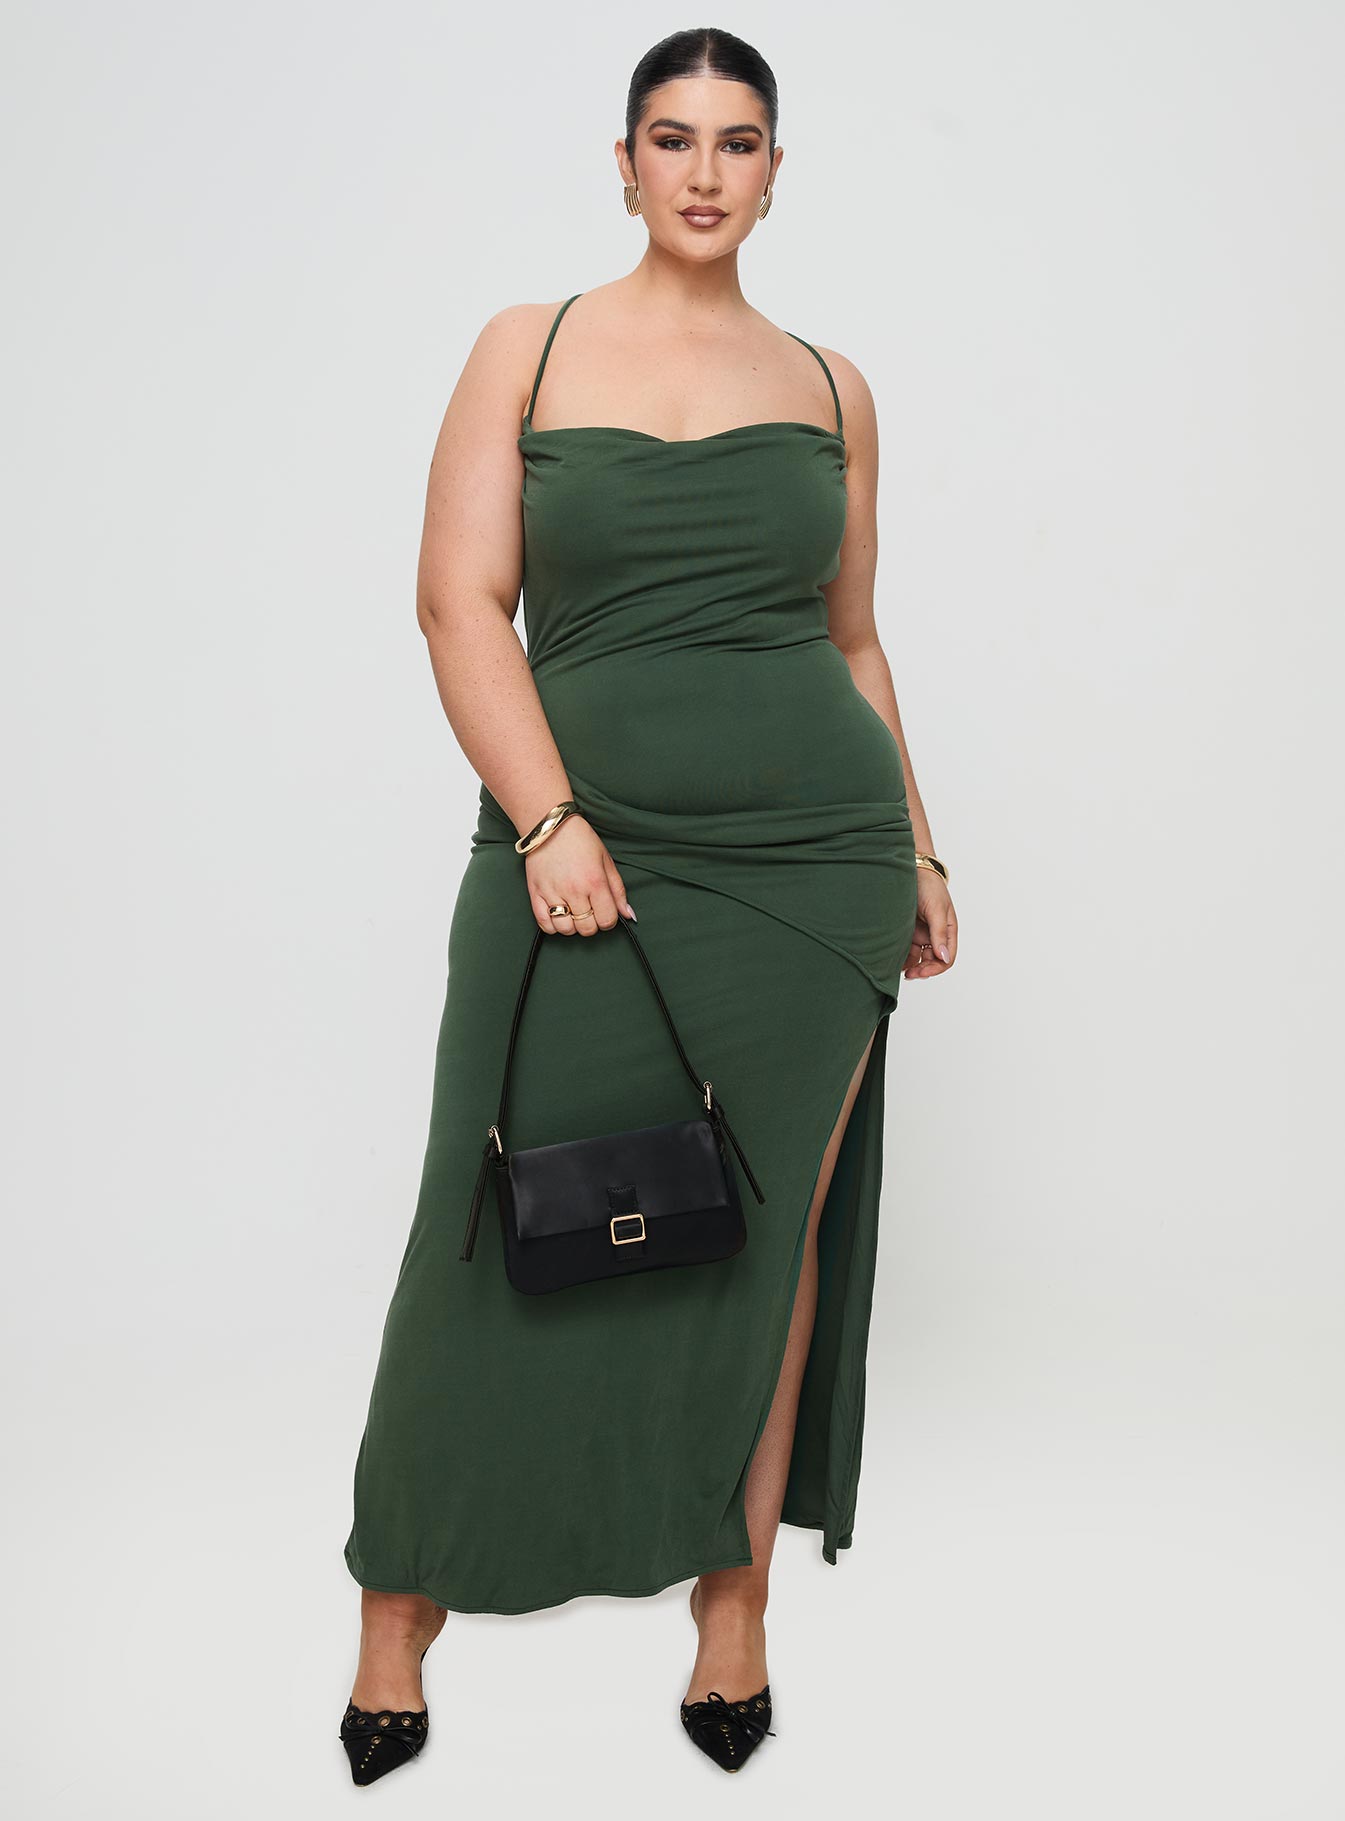 Shop Formal Dress - Marchesi Cupro Maxi Dress Green Curve sixth image